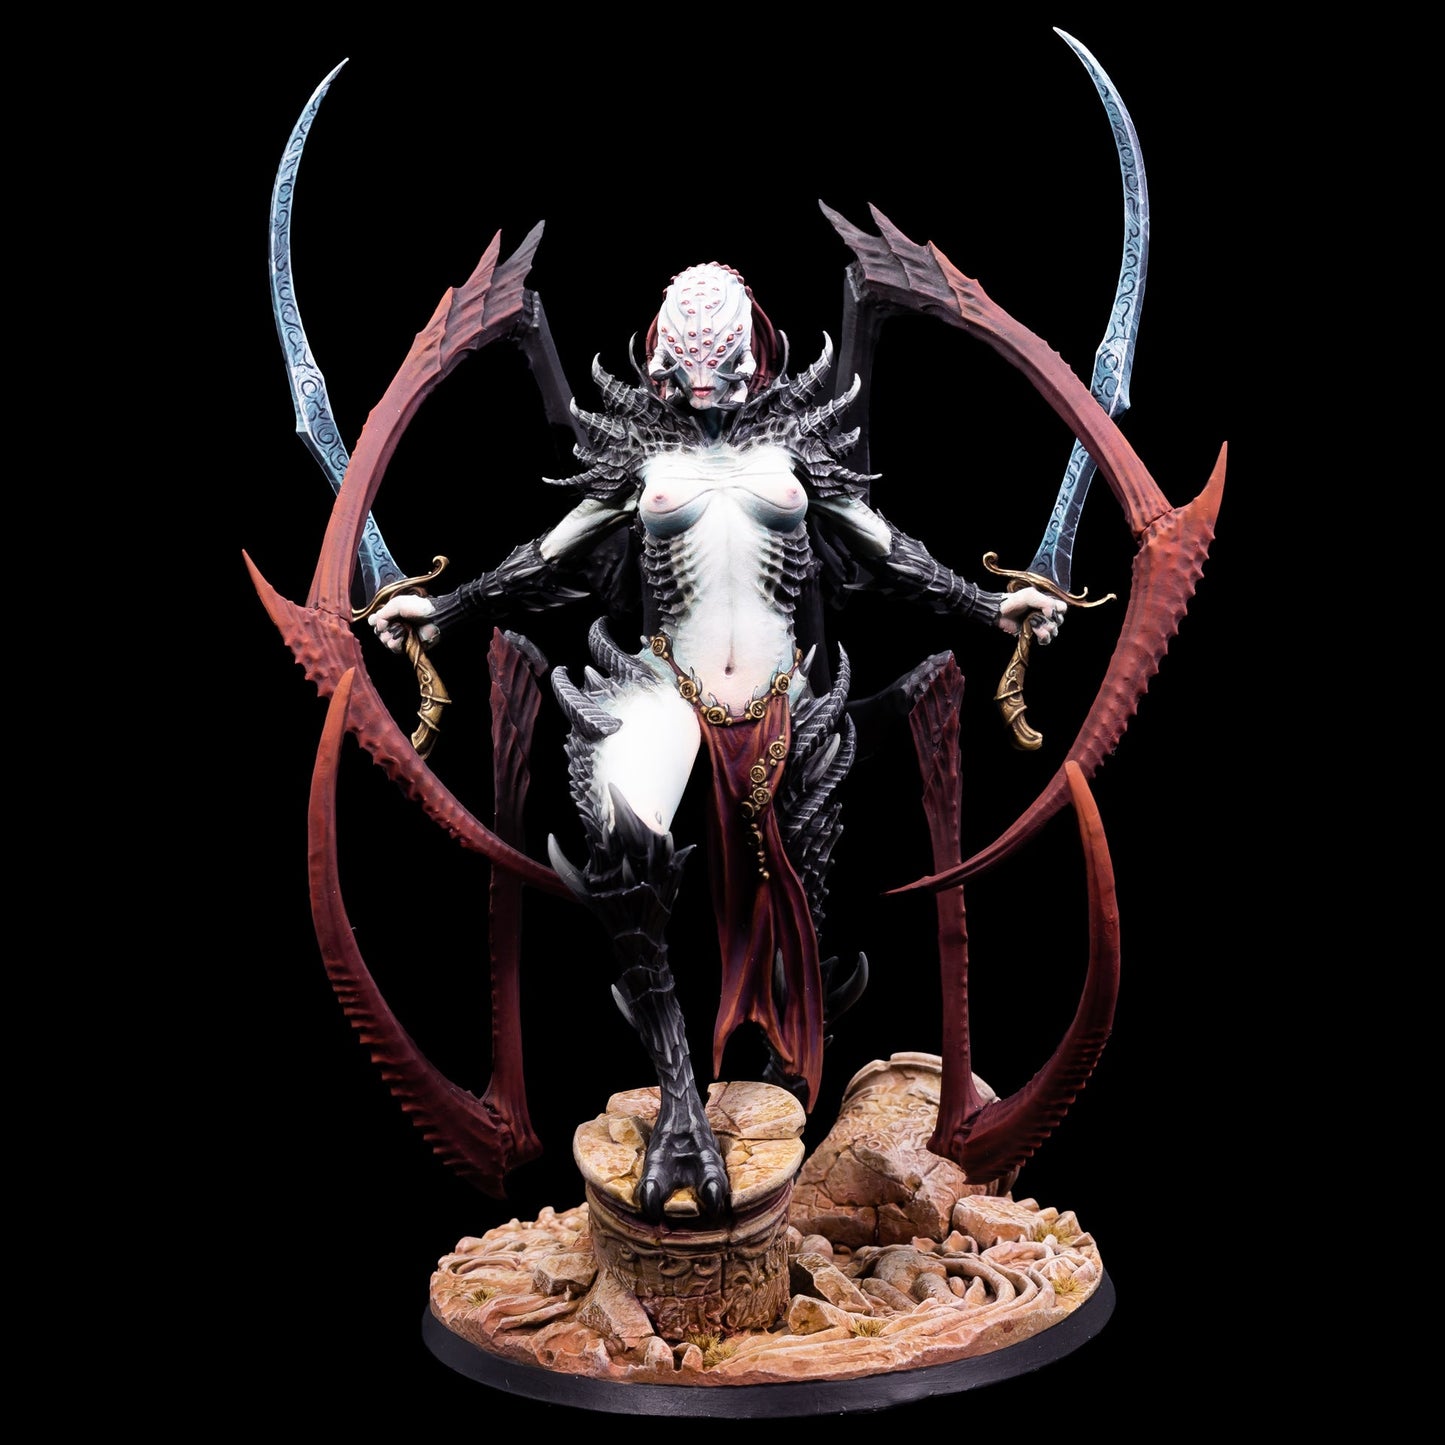 Nephila - Spider Demon Limited Edition Variant